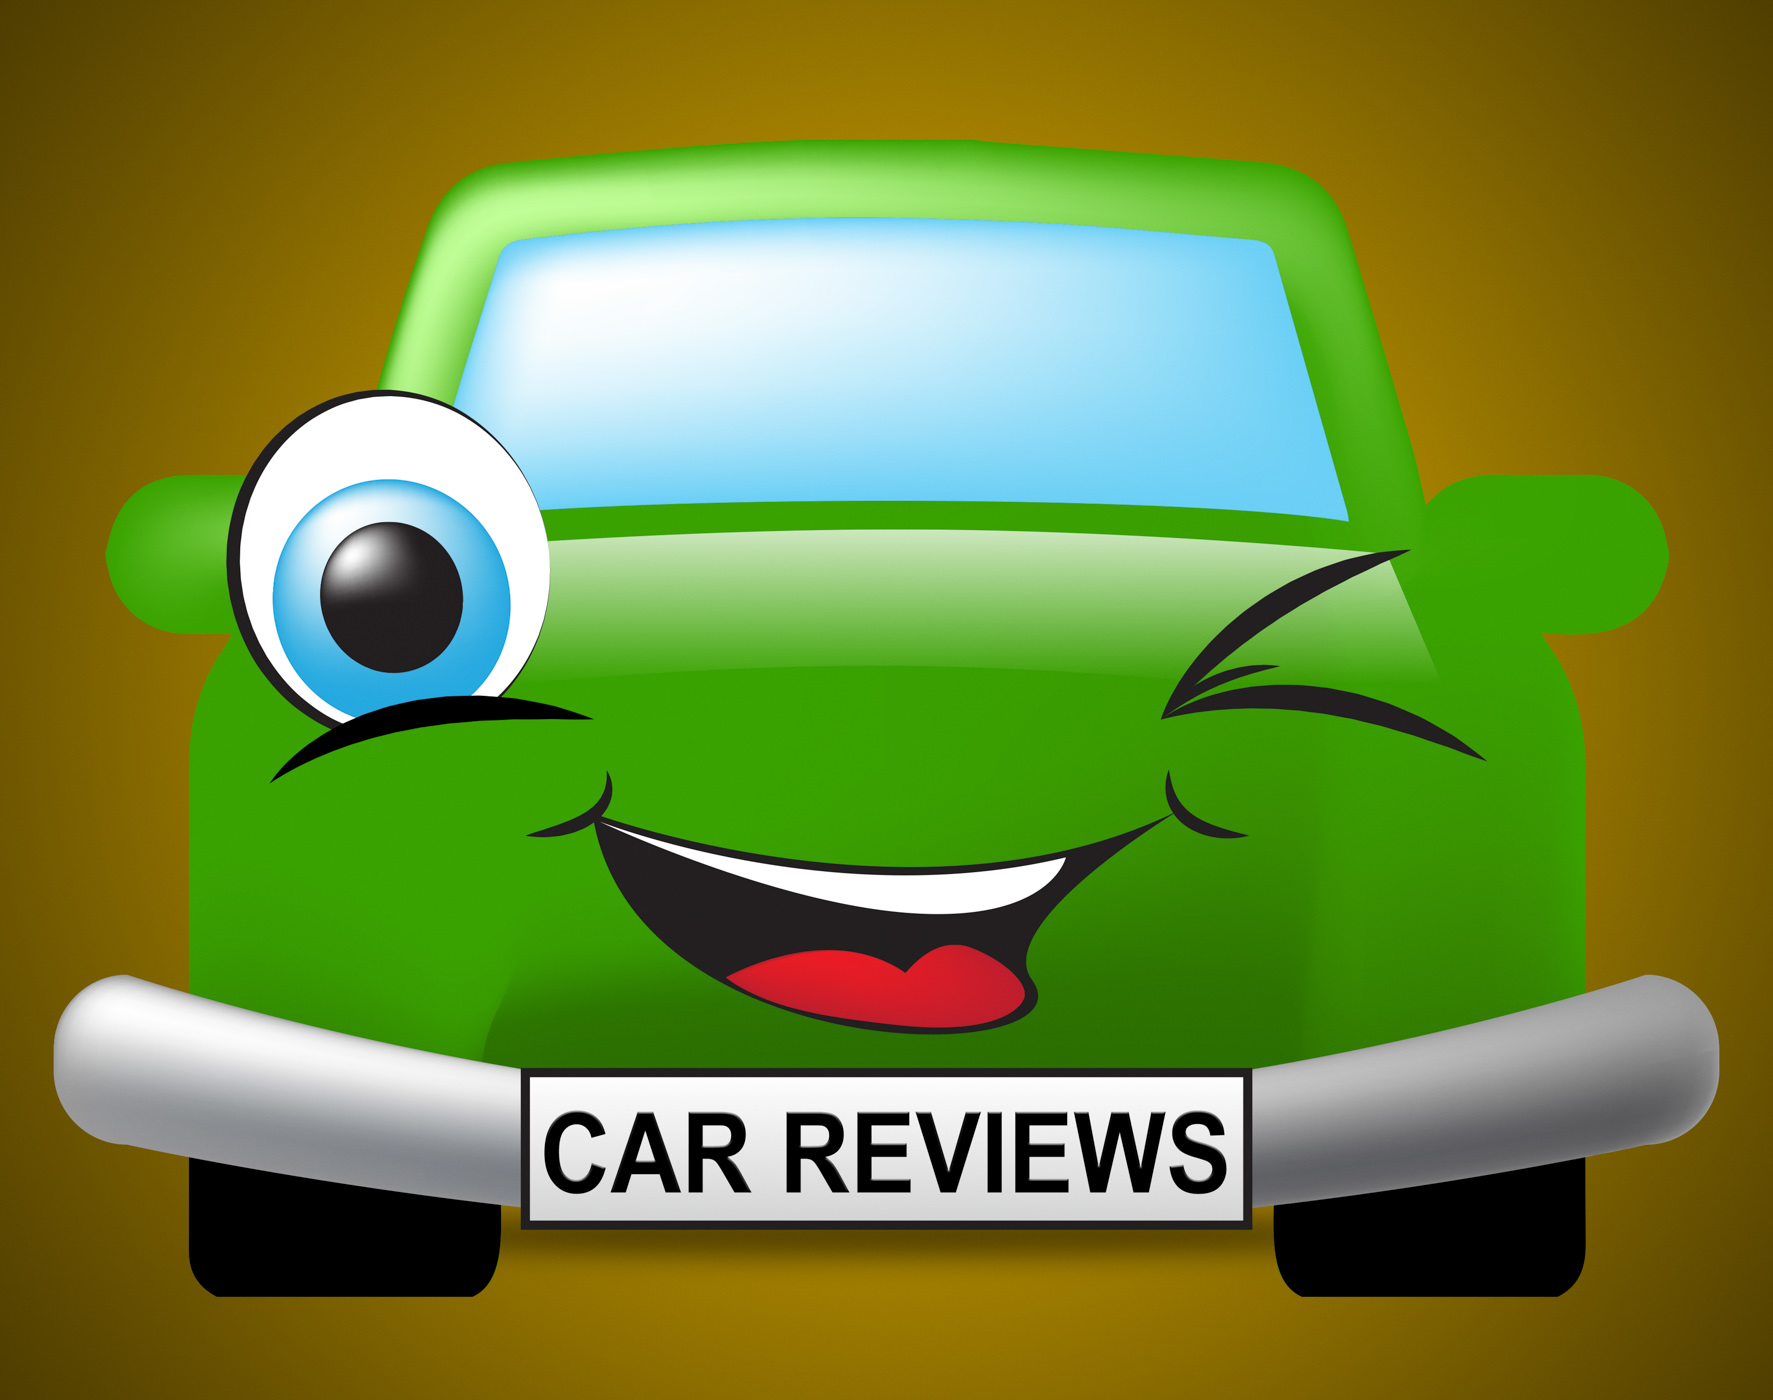 Car reviews indicates assess vehicles and transportation photo